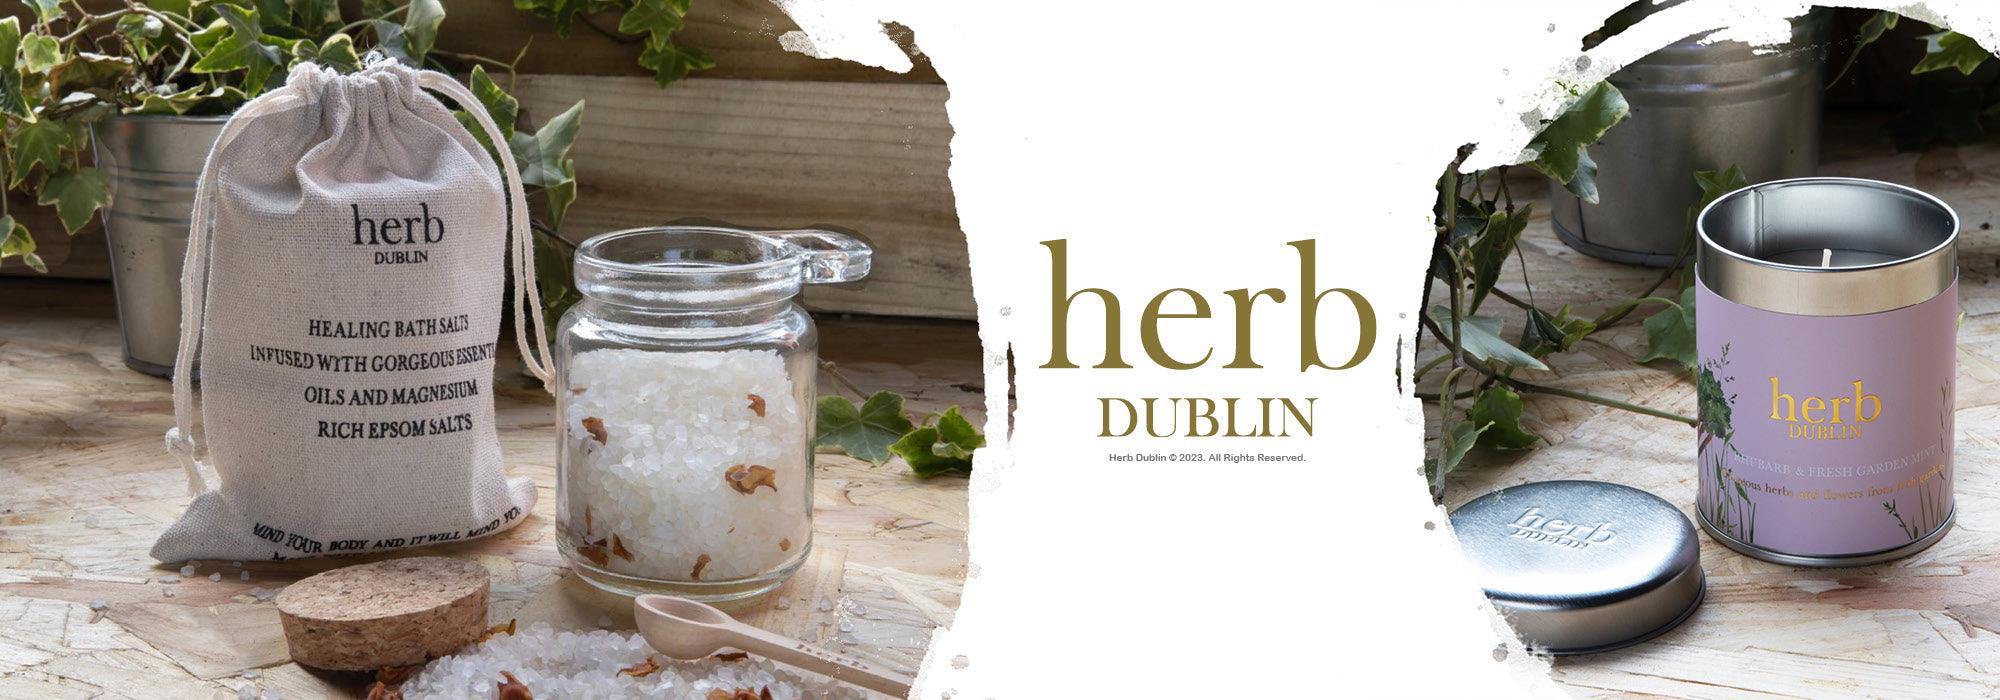 Herb Dublin - Enesco Gift Shop